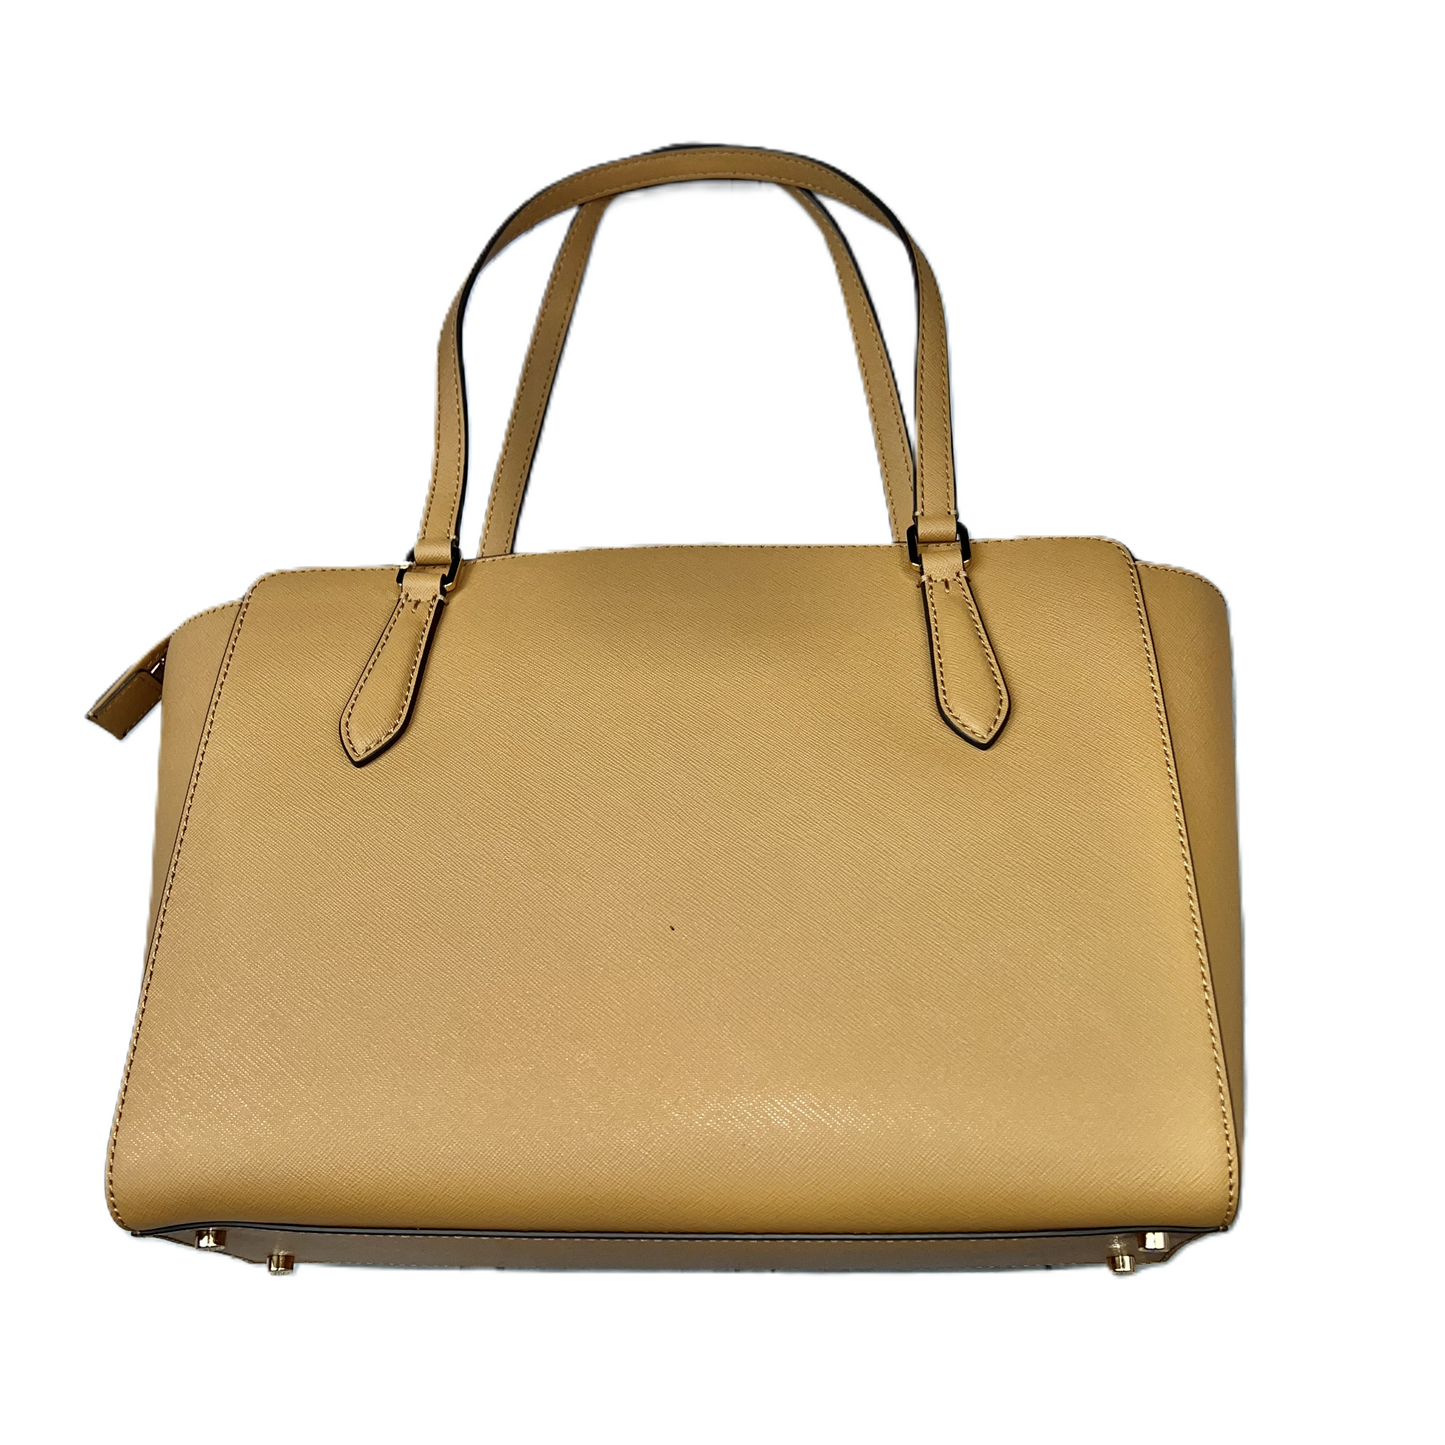 Handbag Designer By Tory Burch, Size: Medium